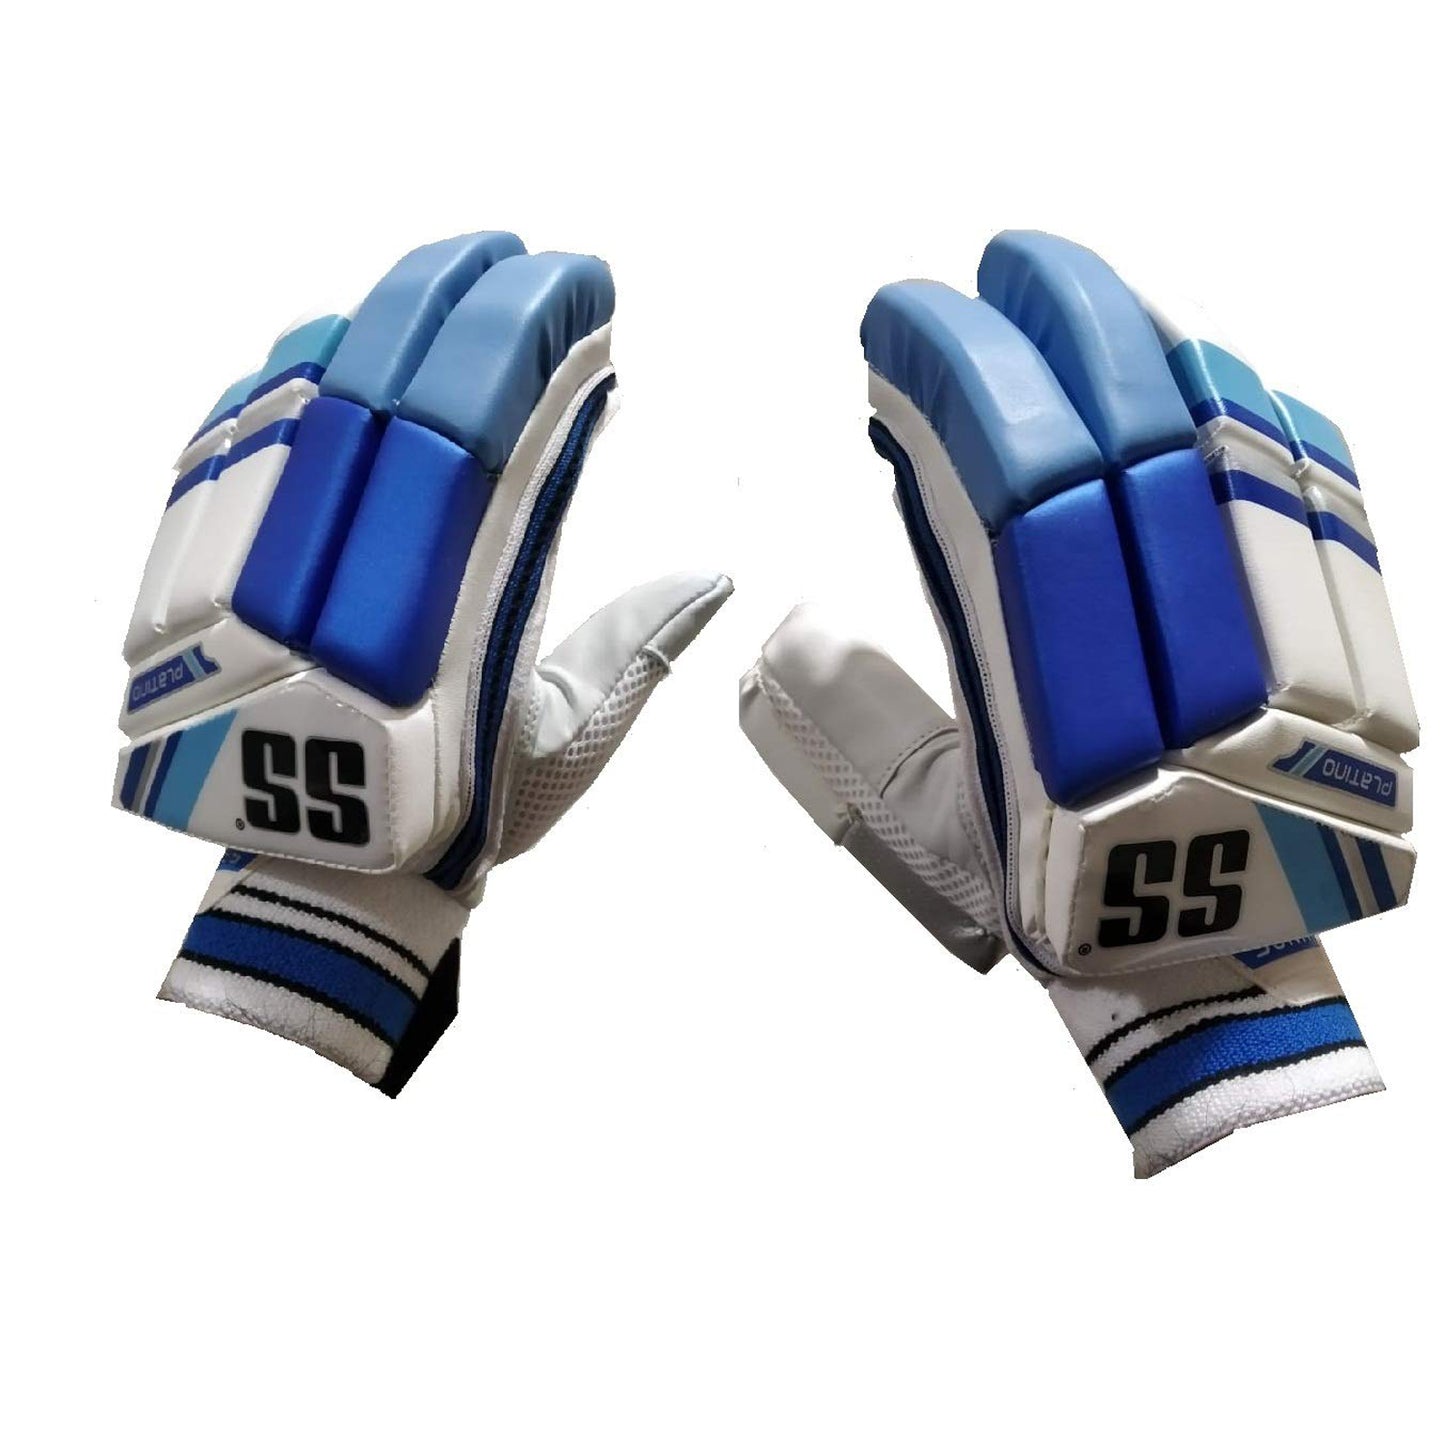 SS Platino LH Batting Gloves, White/Blue - Best Price online Prokicksports.com